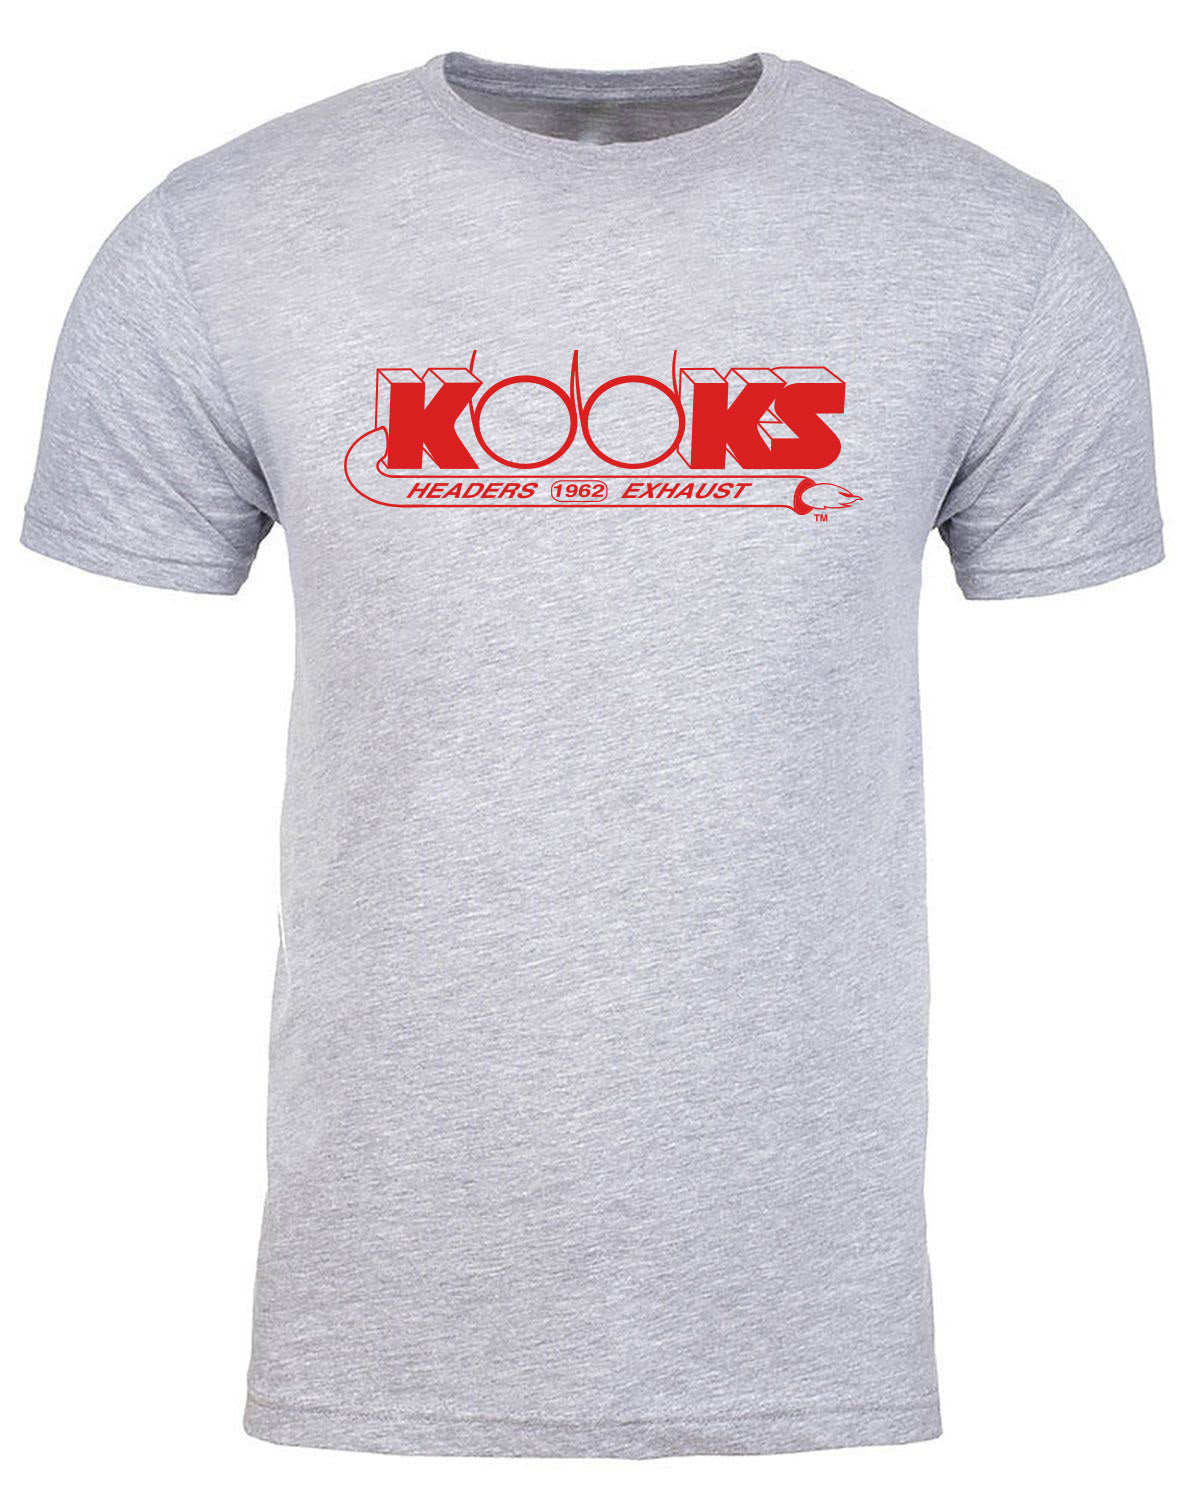 Kooks Custom Headers T-Shirt TS-100647-06